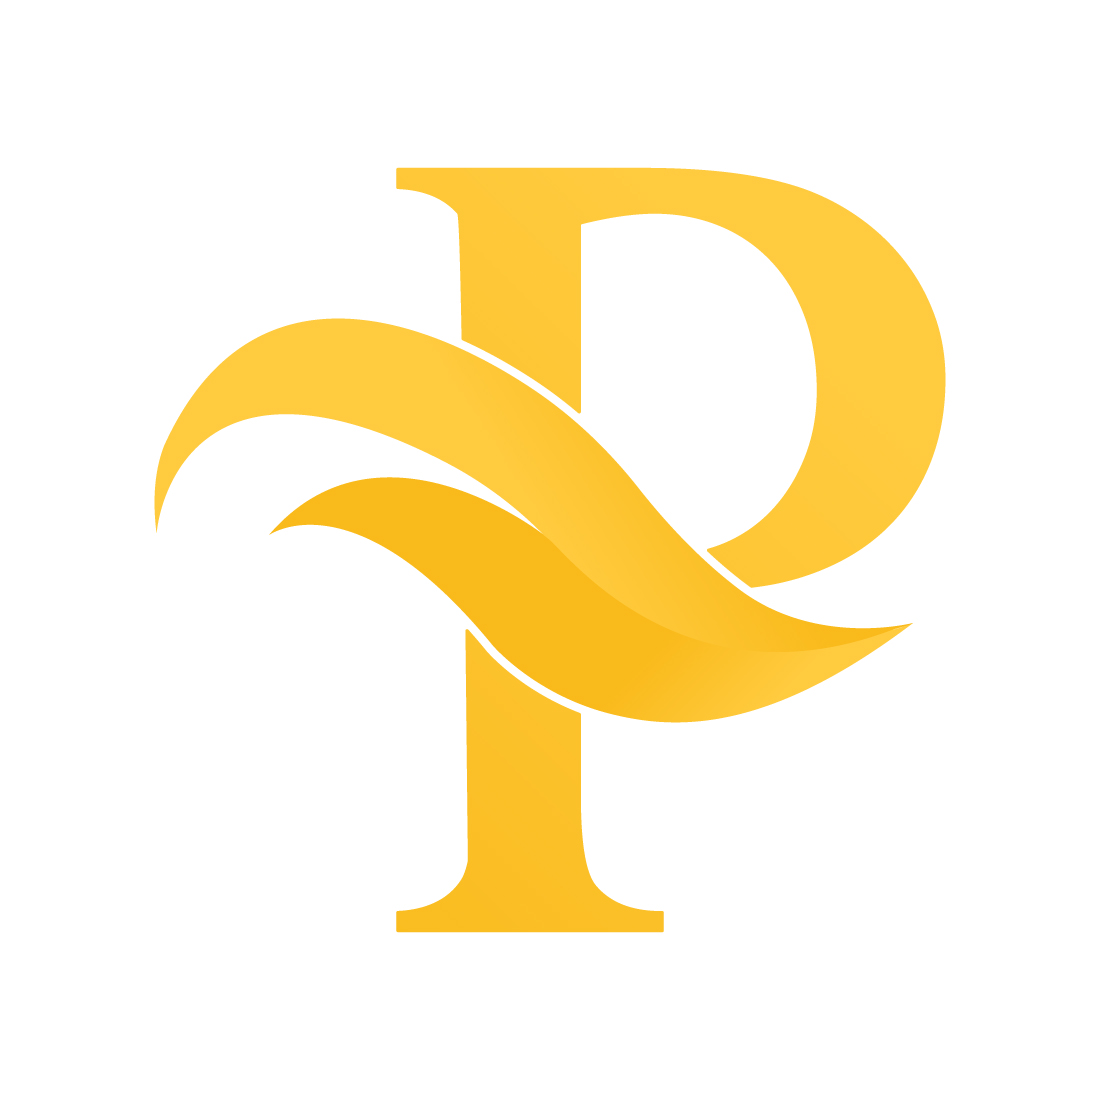 Initials P letter logo deign vector images P logo golden color best company identity preview image.